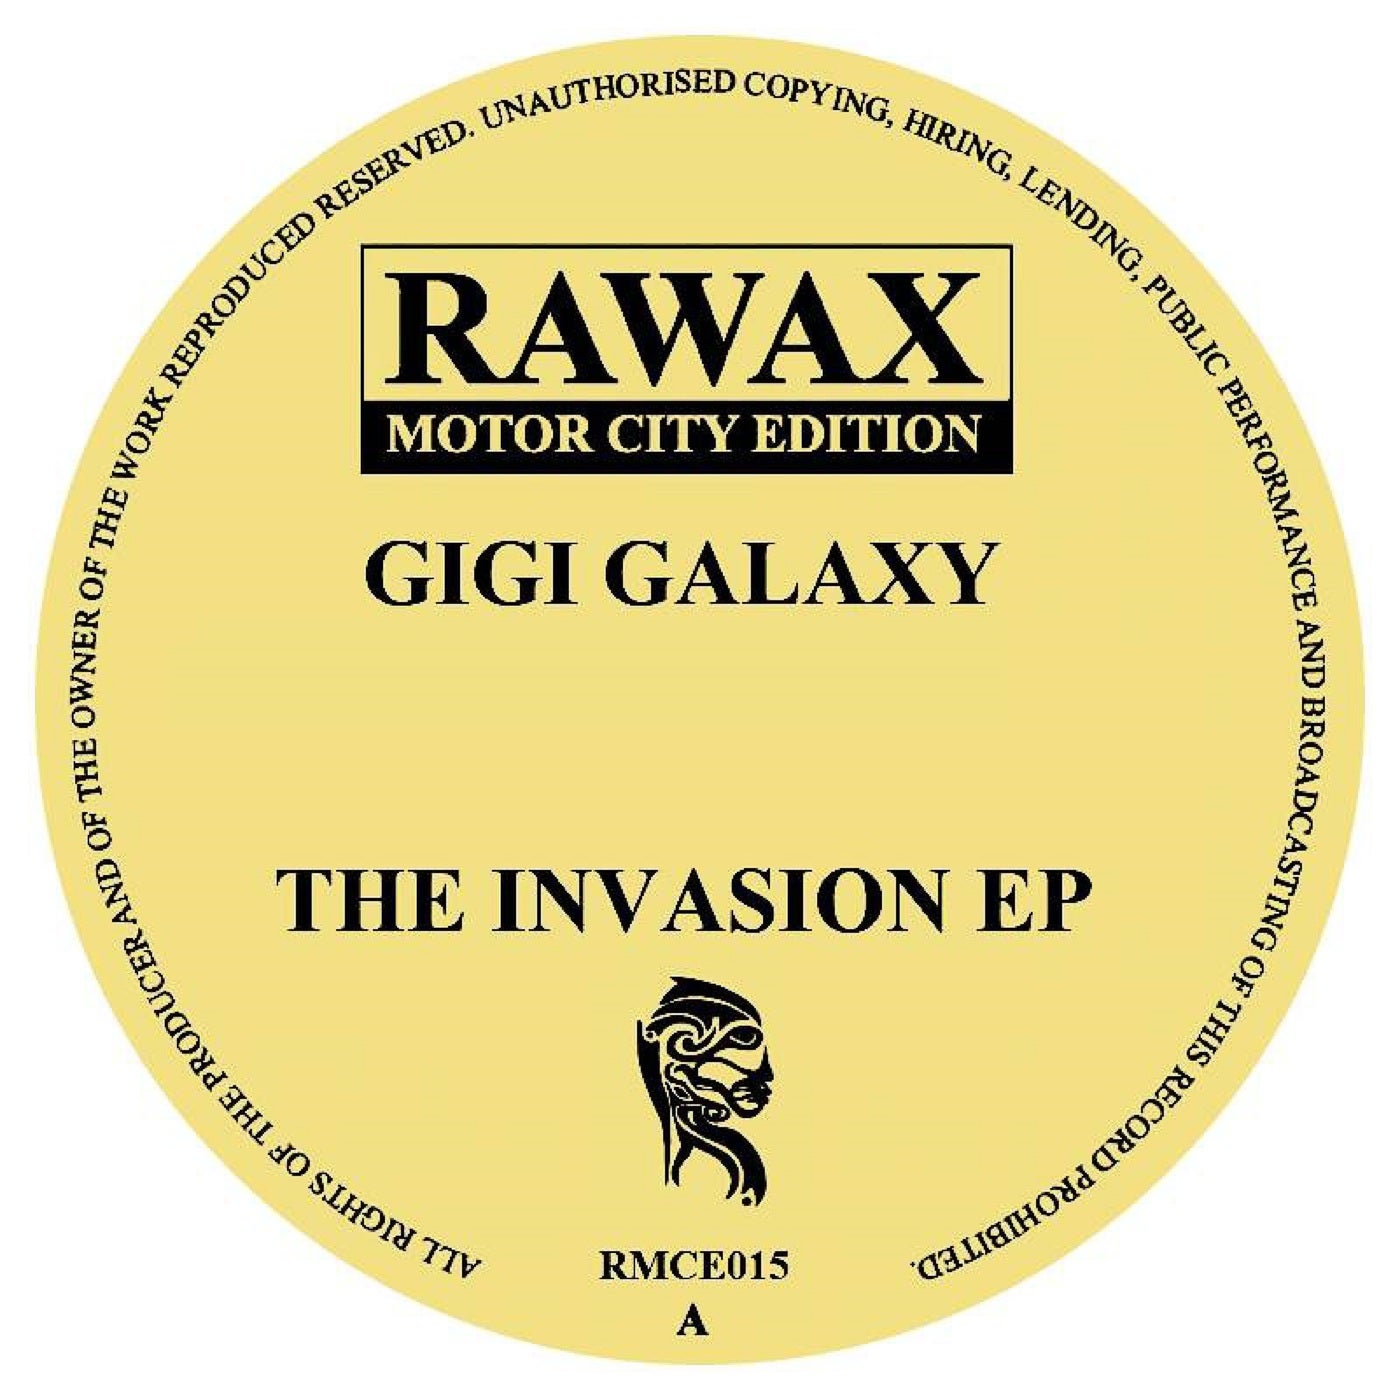 THE INVASION EP